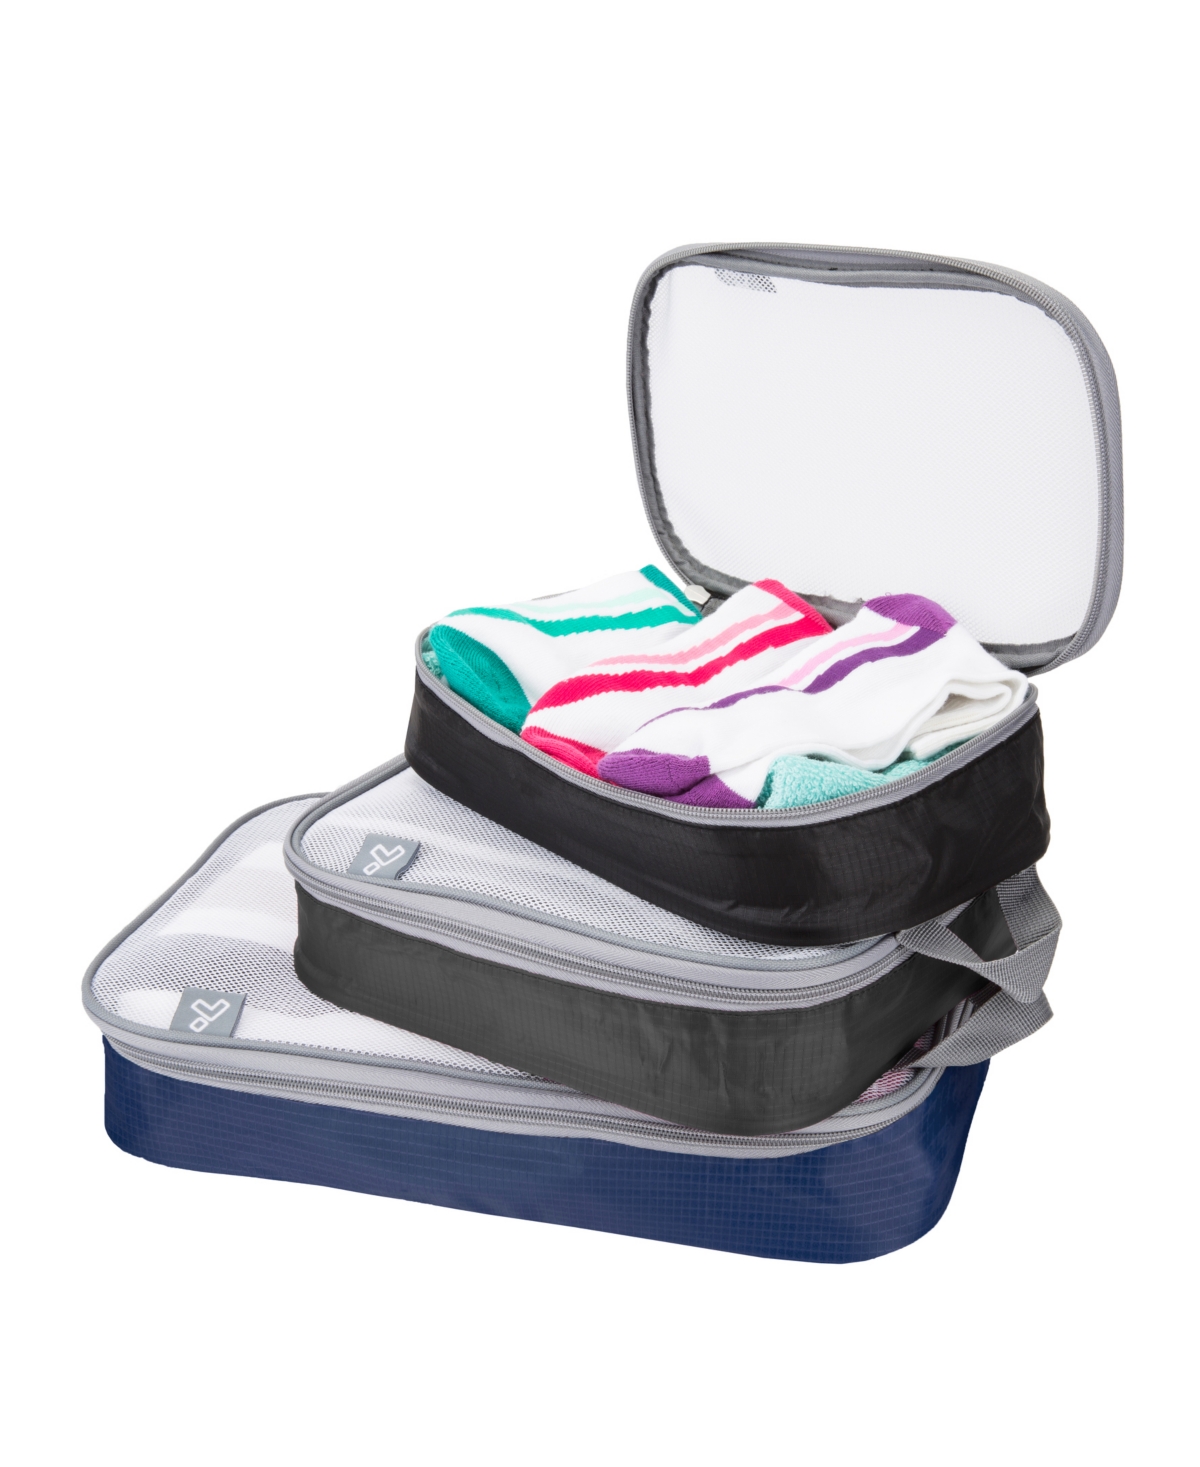 Dartwood Compression Packing Cubes - Suitcase Organizer Bags Set for  Travelling - 1 Set/9 pieces (Black) - Black